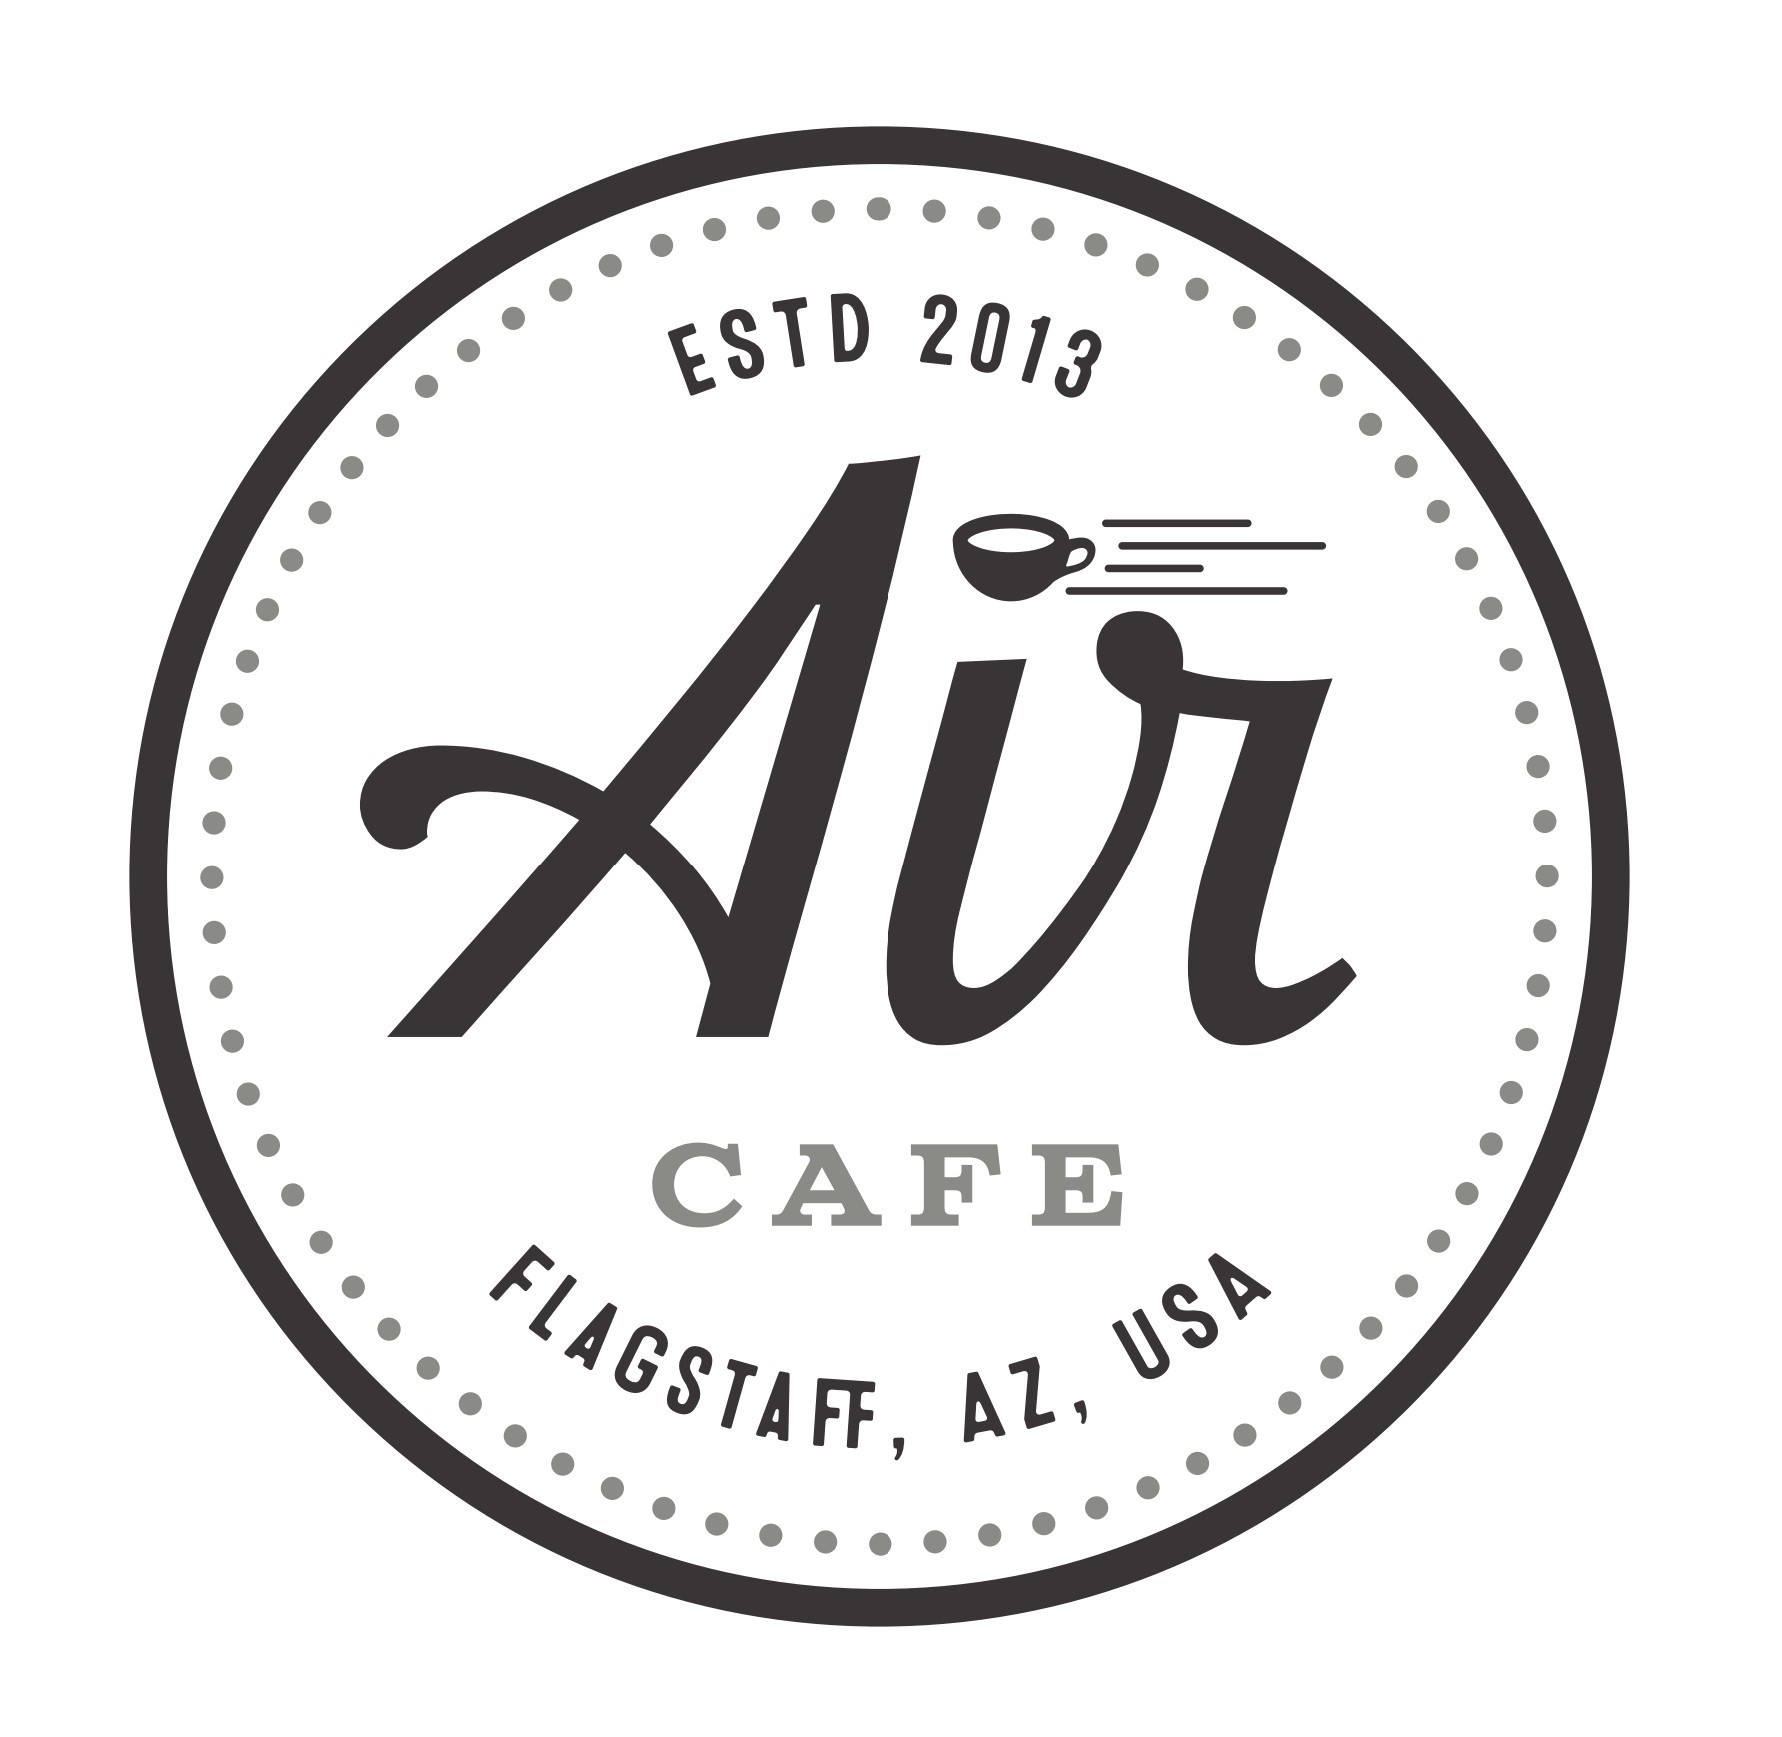 Air Cafe